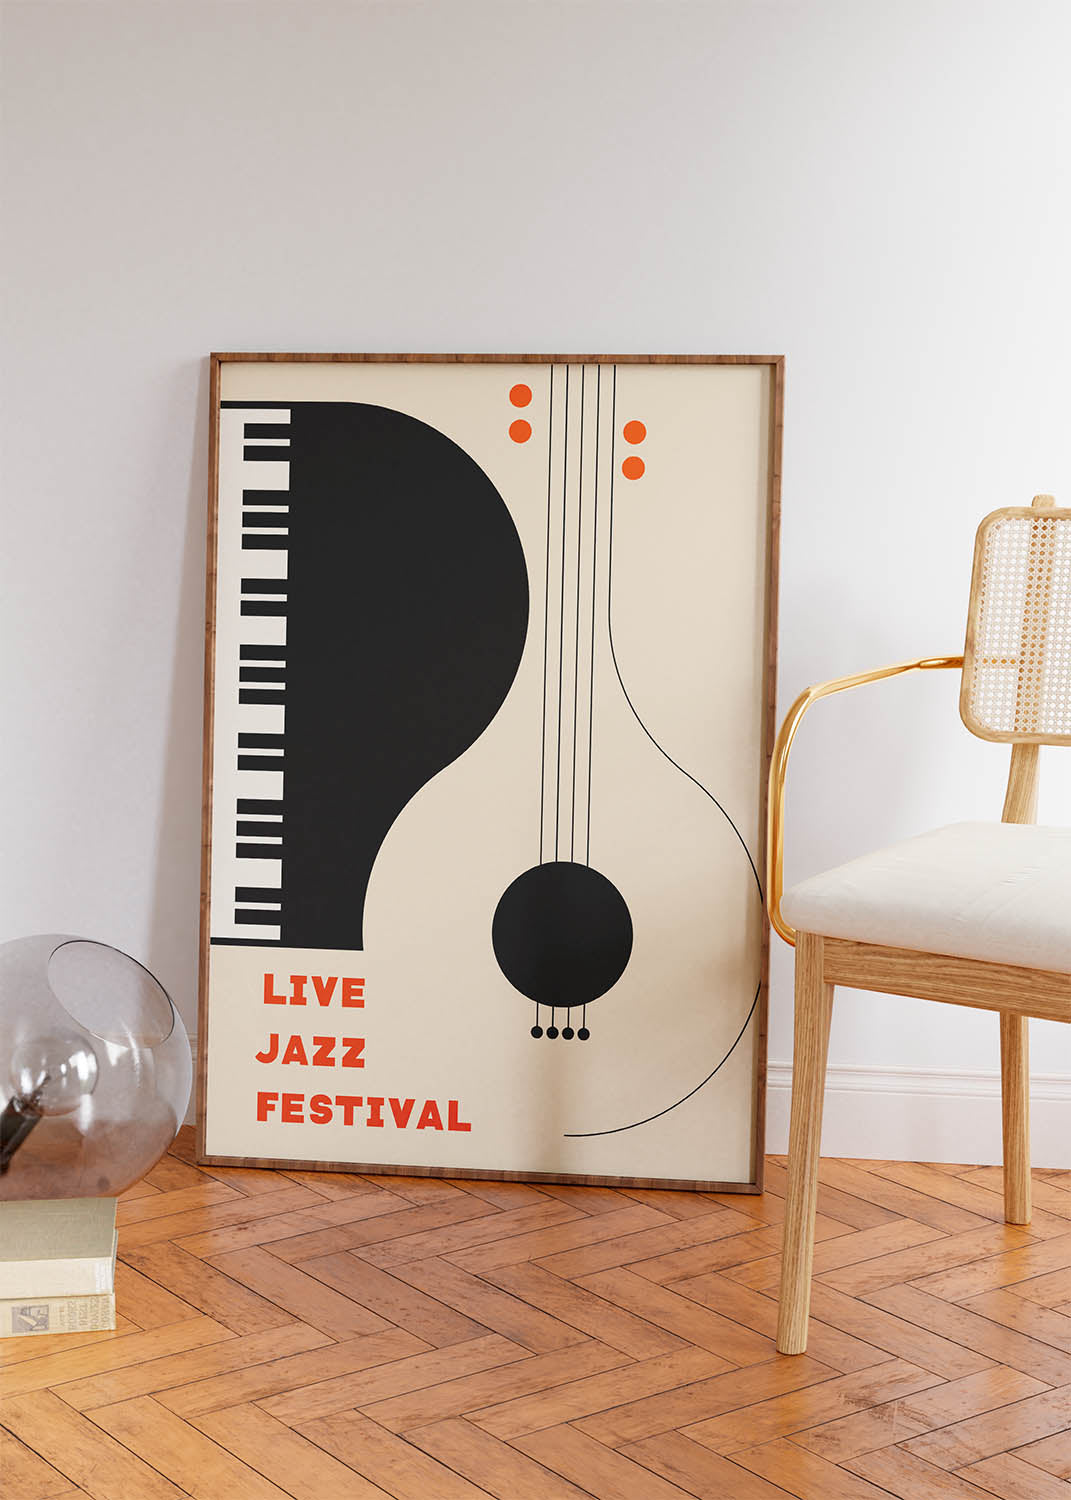 Jazz poster